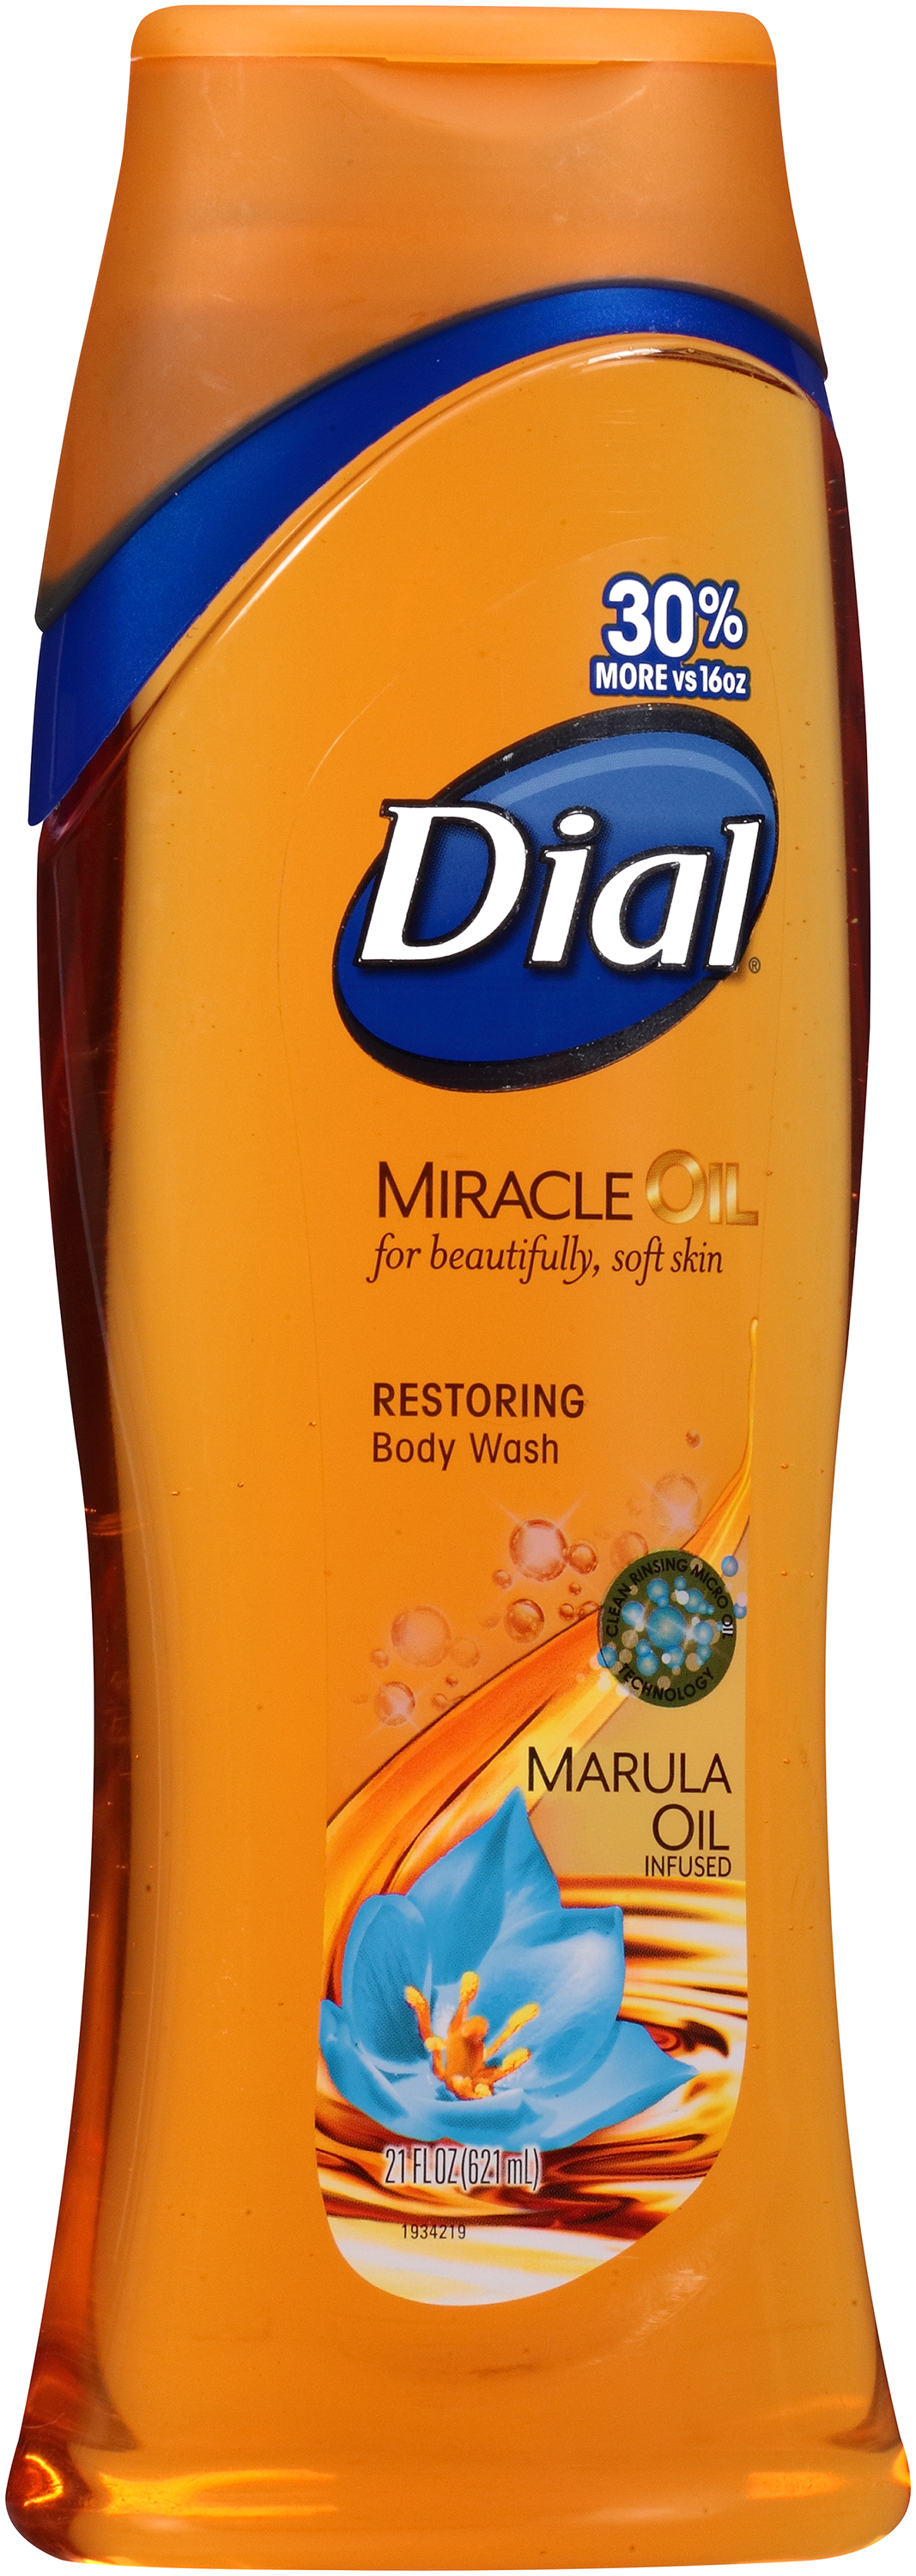 Dial Body Wash, Pamper & Indulge Marula Oil, 21 fl oz - image 2 of 11